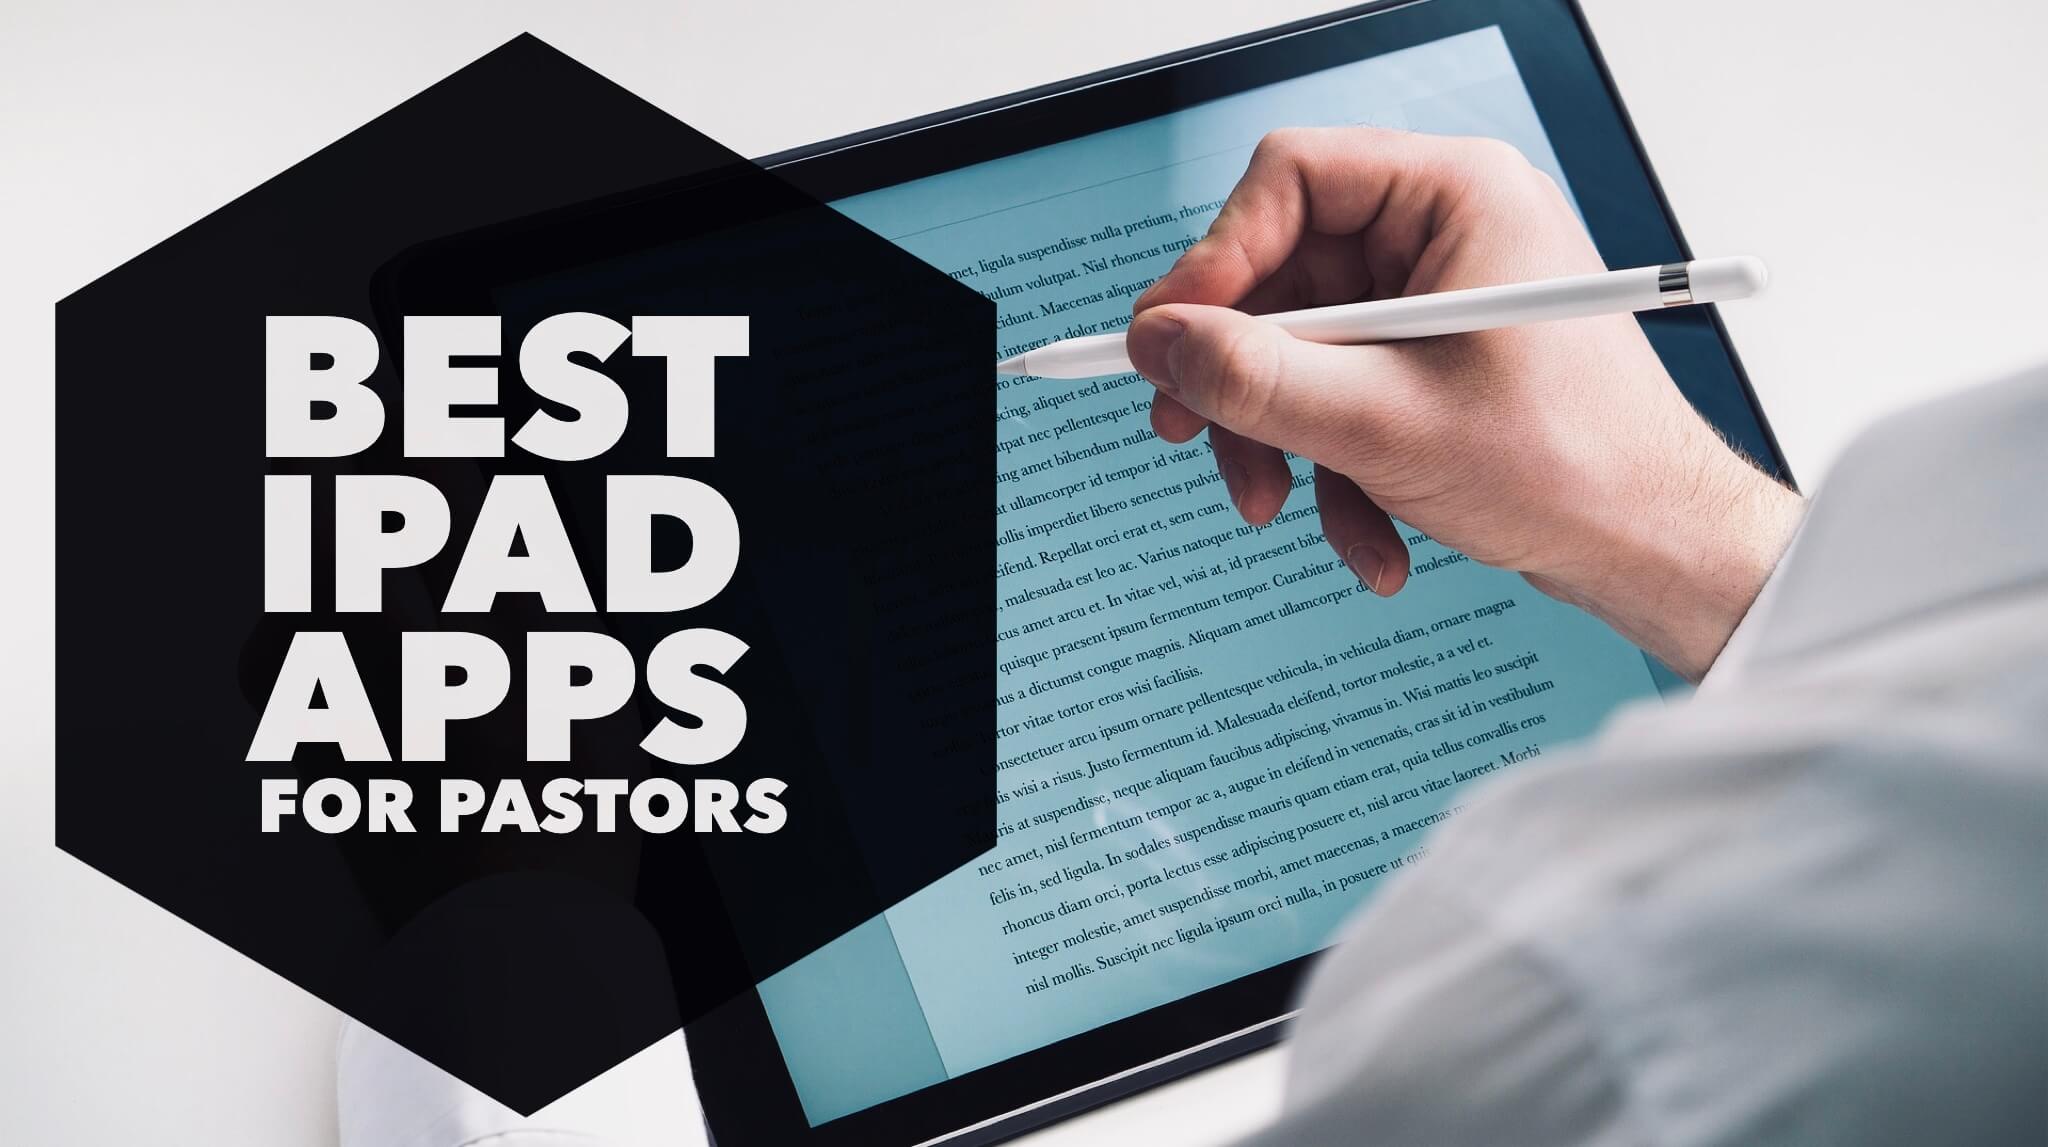 The Best iPad Apps for Pastors (2019)